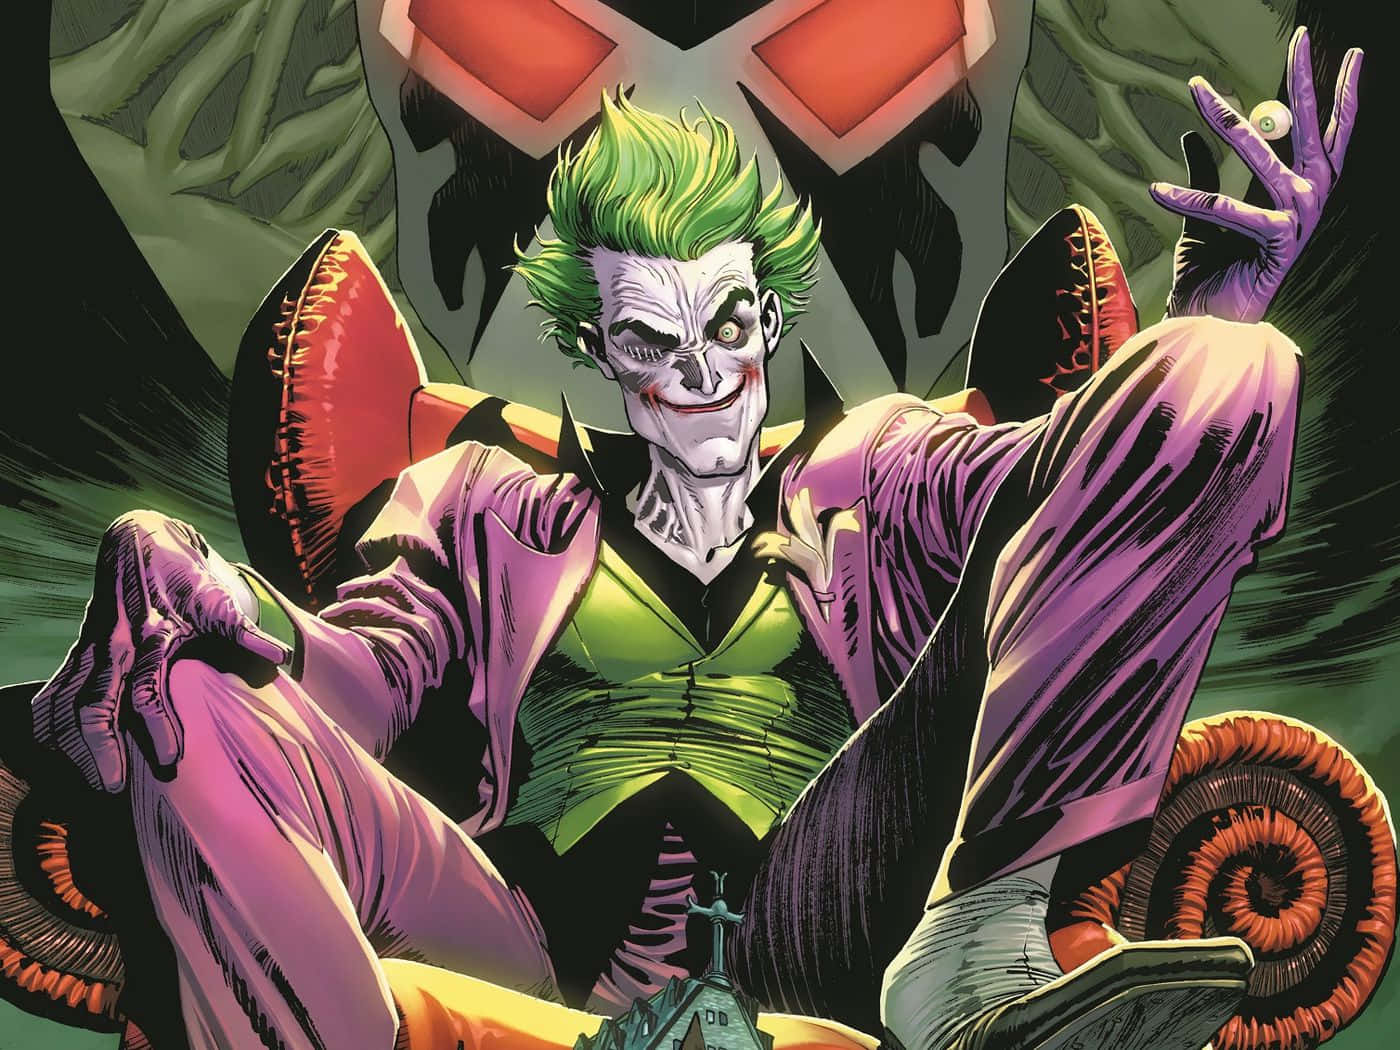 The origin story of the iconic supervillain, The Joker